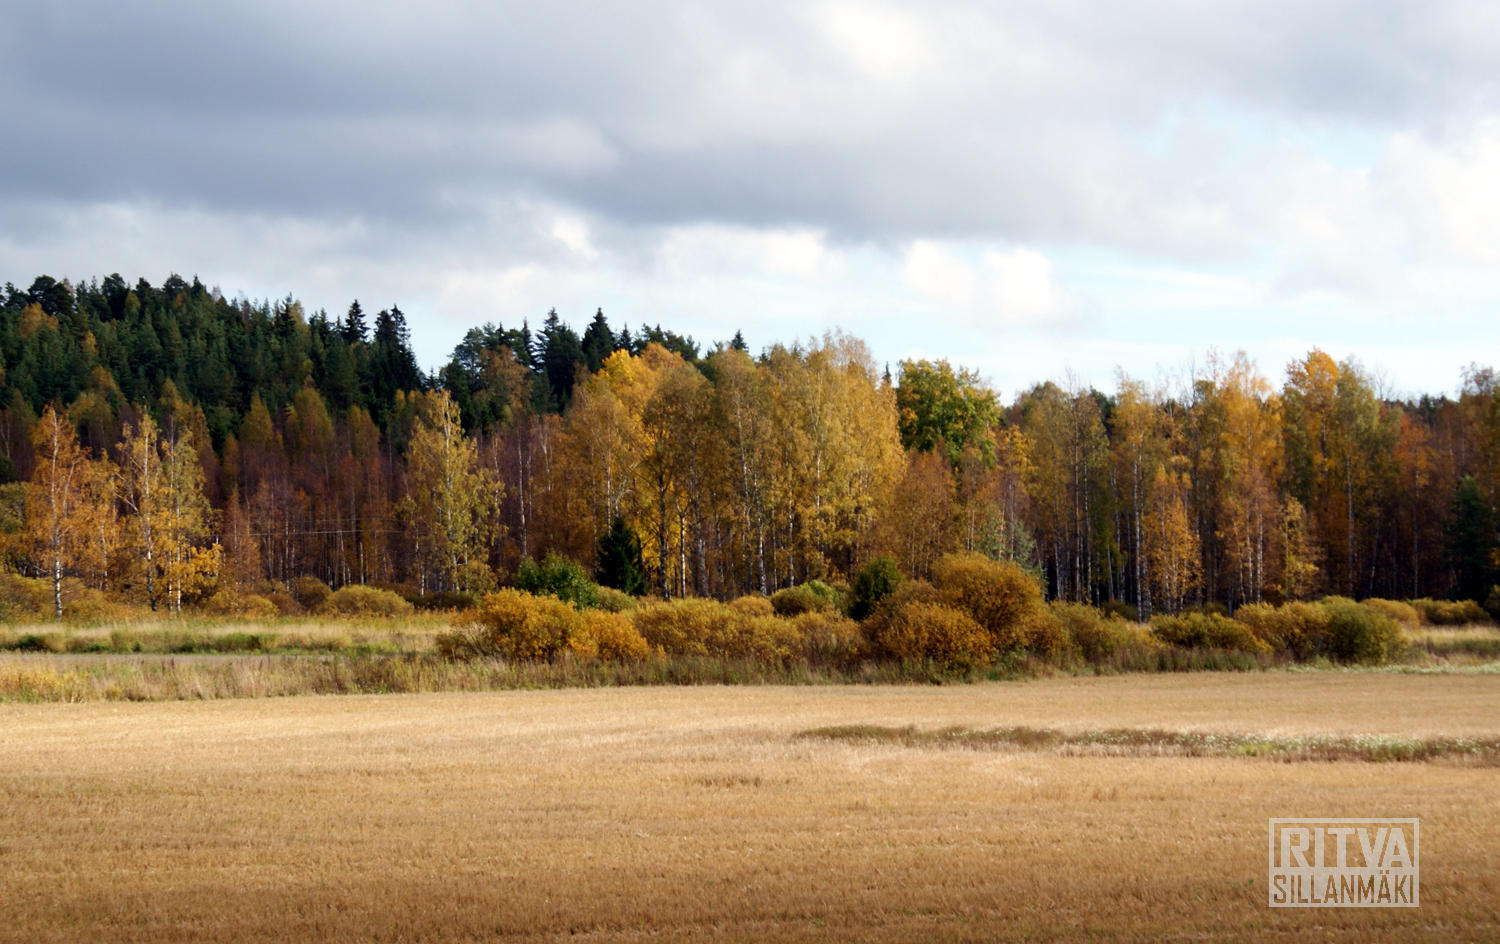 Scenery from Kolsari Finland with Autumn colors/ Ruska – Ritva's Art